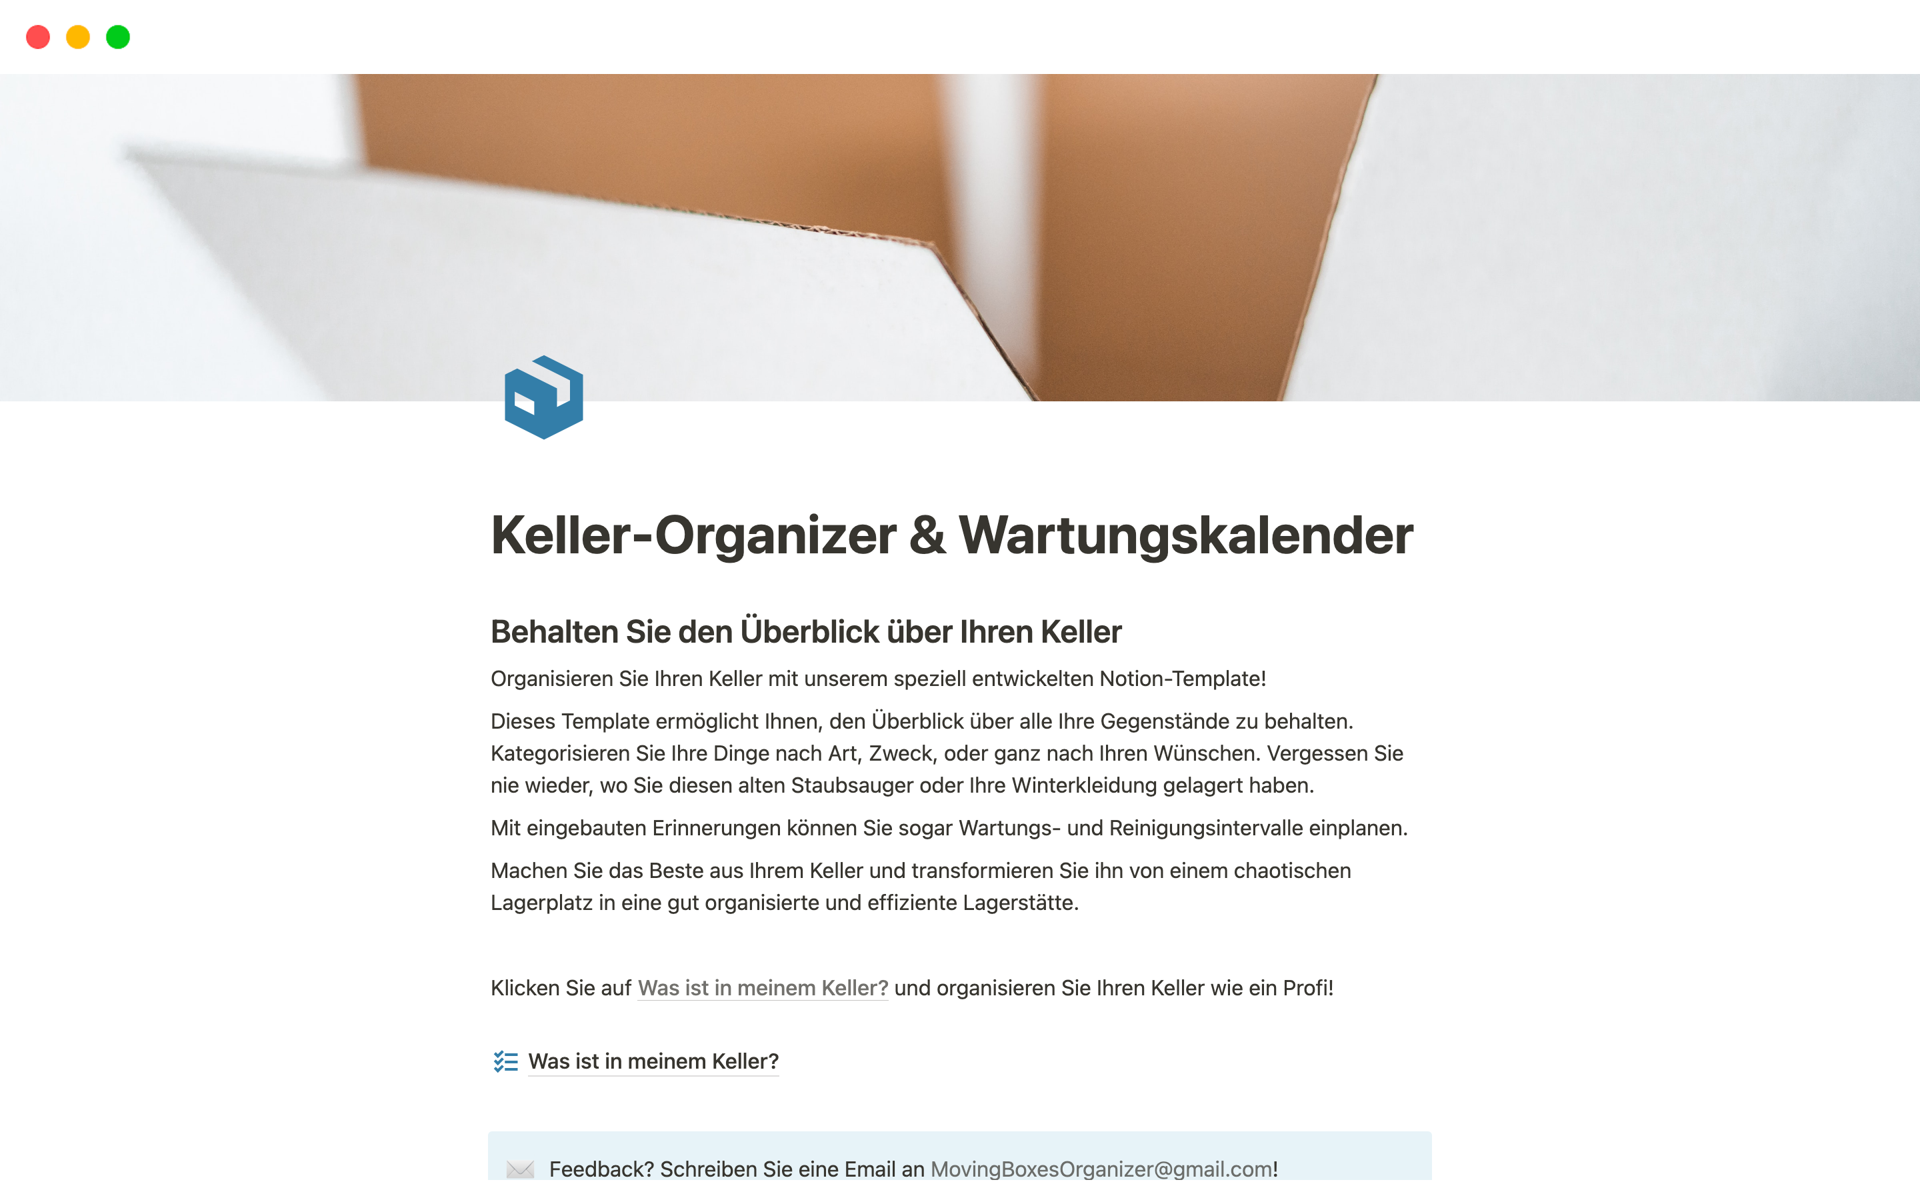 En forhåndsvisning av mal for Keller-Organizer & Wartungskalender